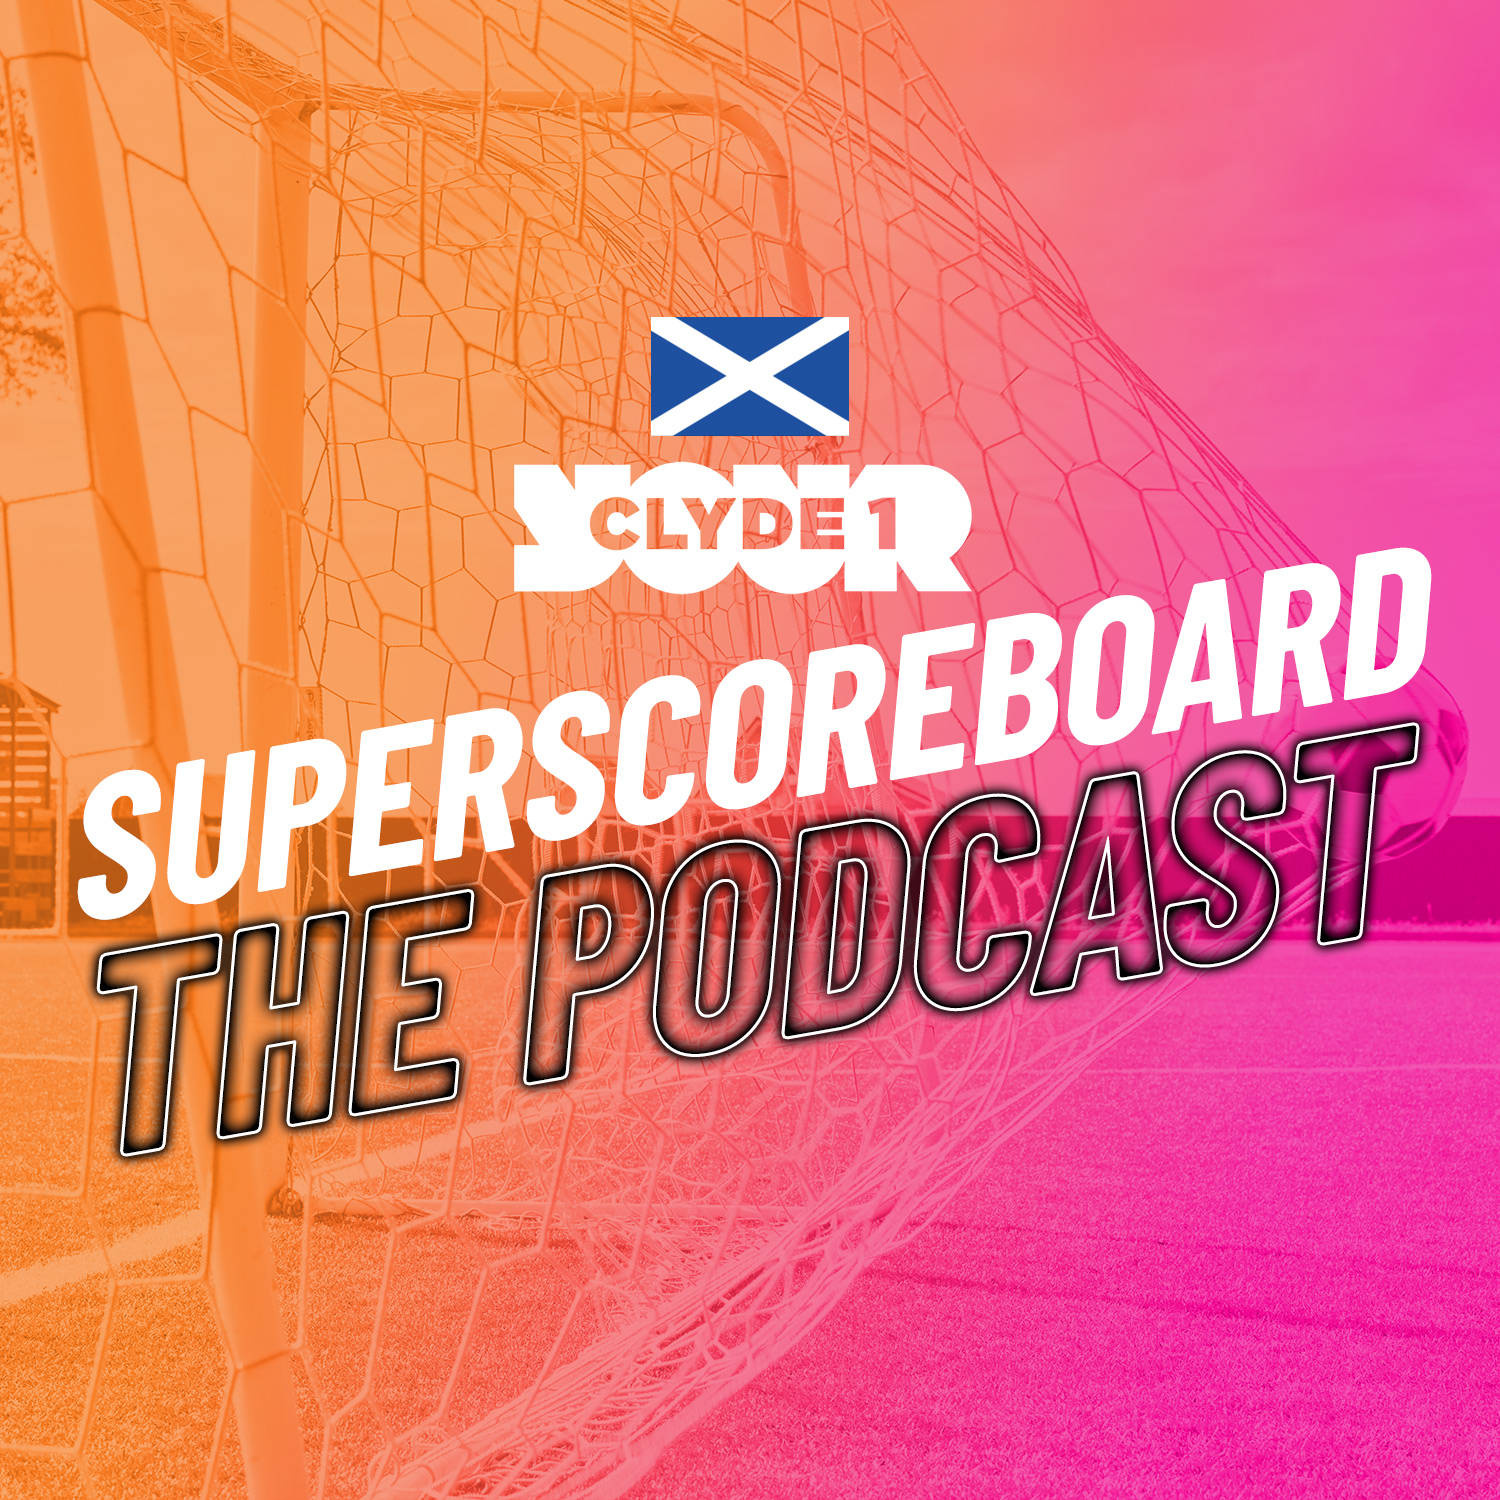 Wednesday 27th November Clyde 1 Superscoreboard